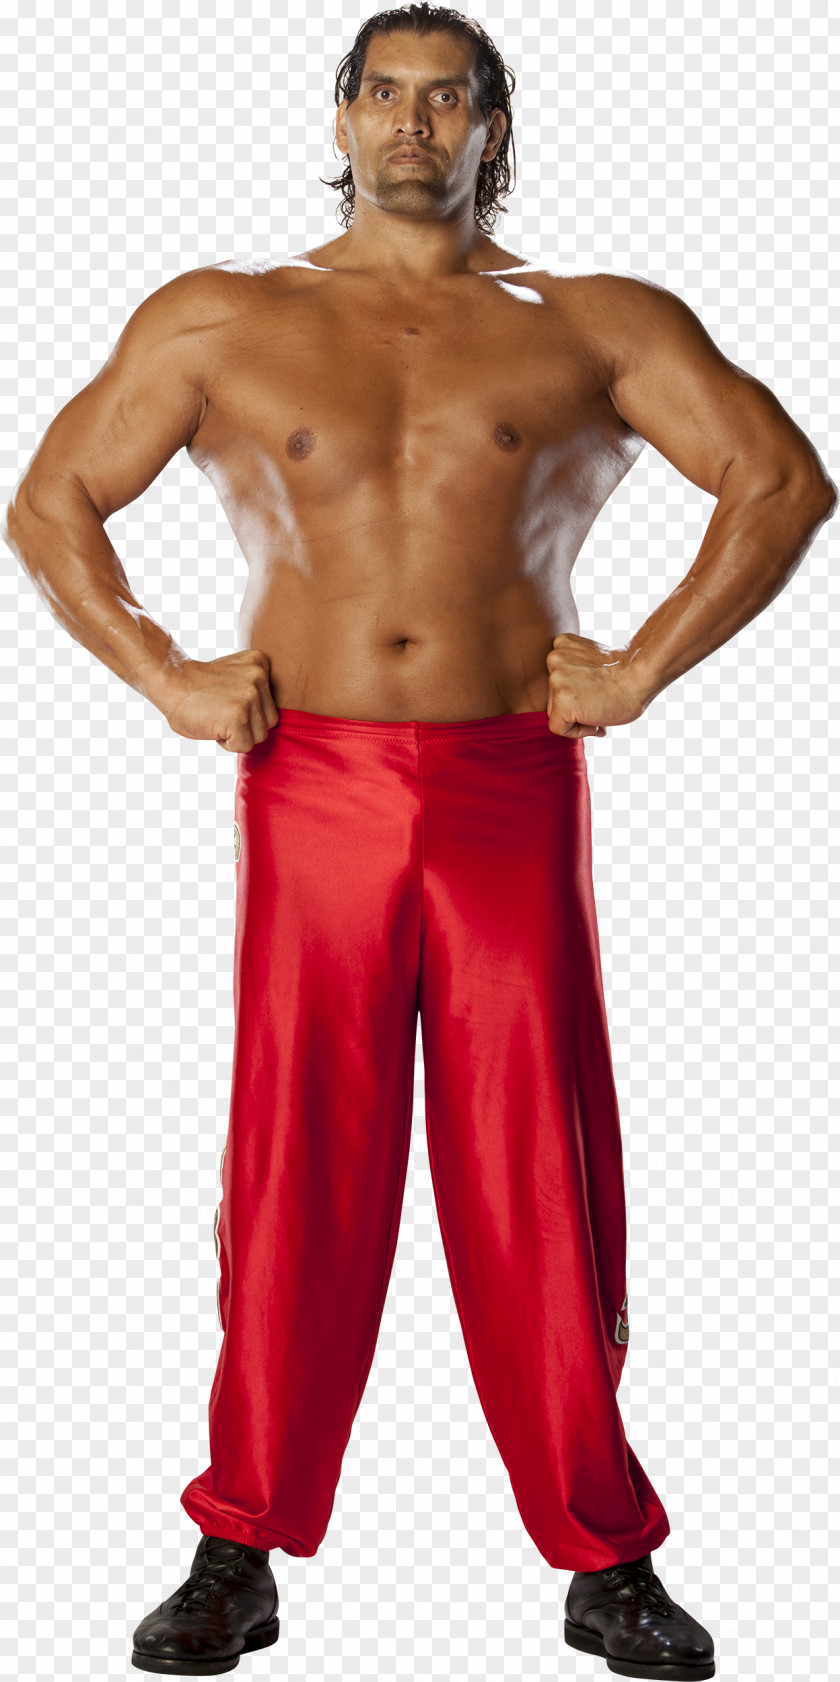 The Great Khali WWE SmackDown Championship Professional Wrestler PNG Wrestler, wrestling clipart PNG